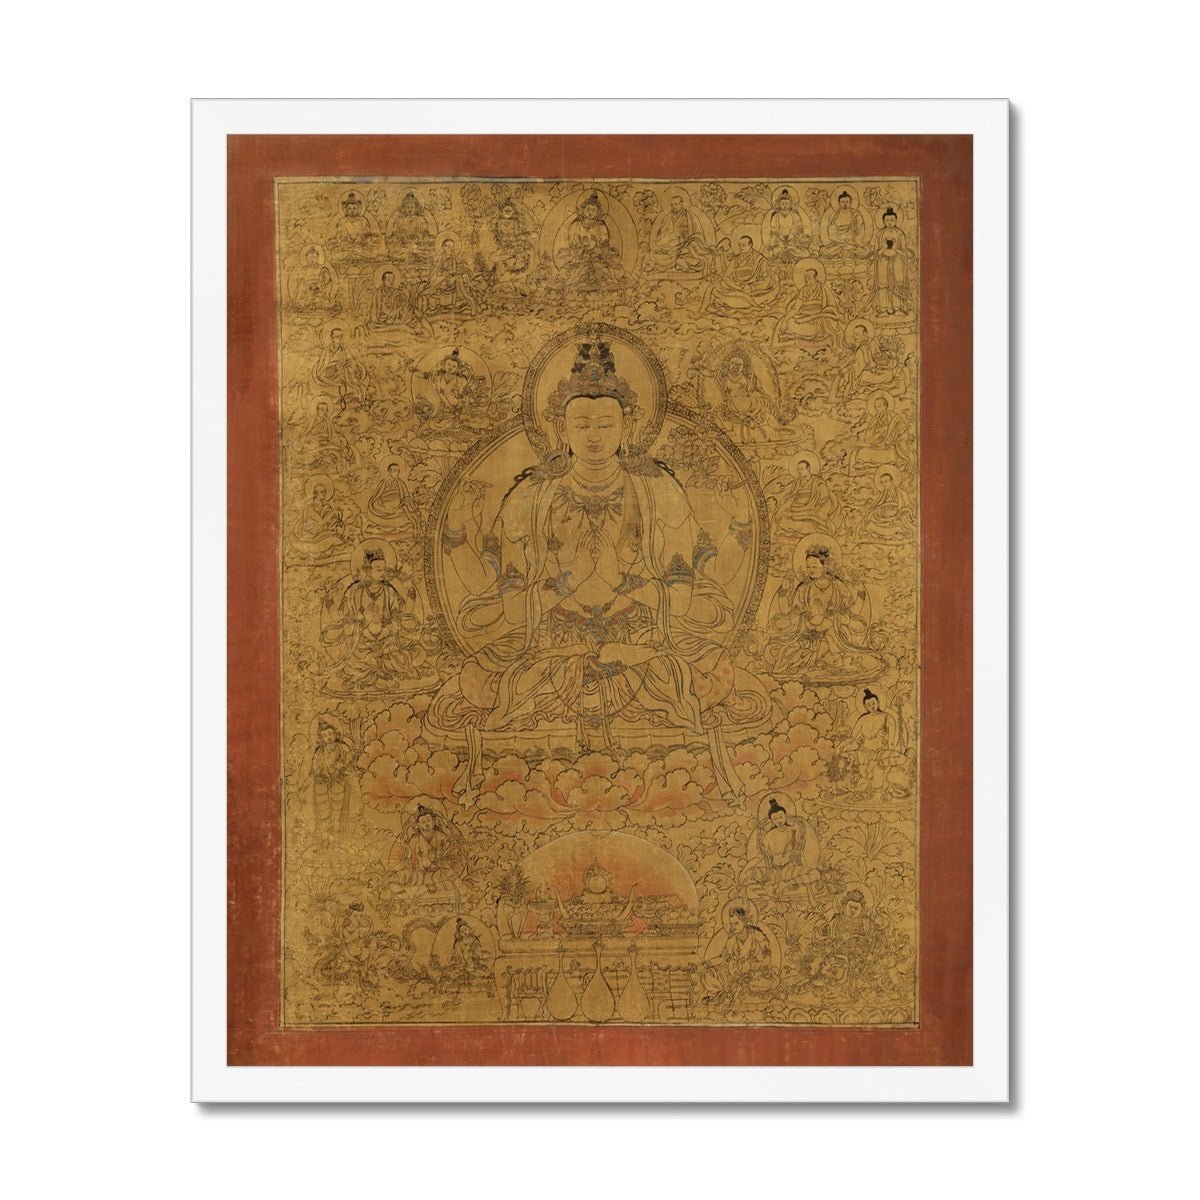 Fine art 6"x8" / White Frame Framed Avalokiteshvara Buddha of Compassion | Guan Yin, Kuan Yin Bodhisattva | Meditation Mindfulness Yoga Framed Art Print